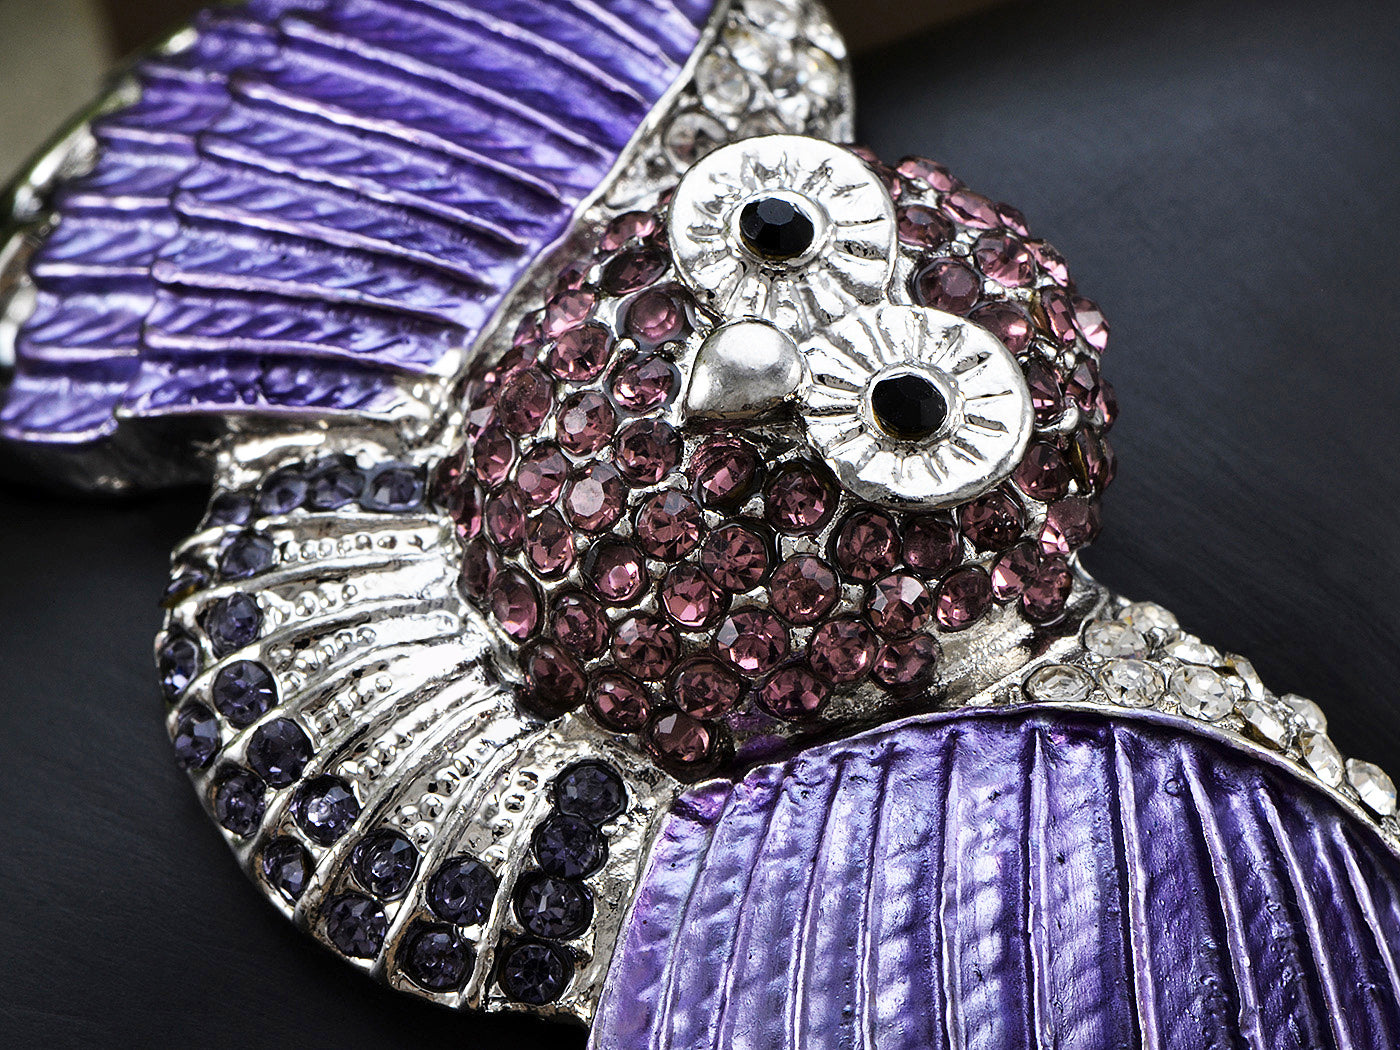 Owl Bird Bangle Cuff Bracelet